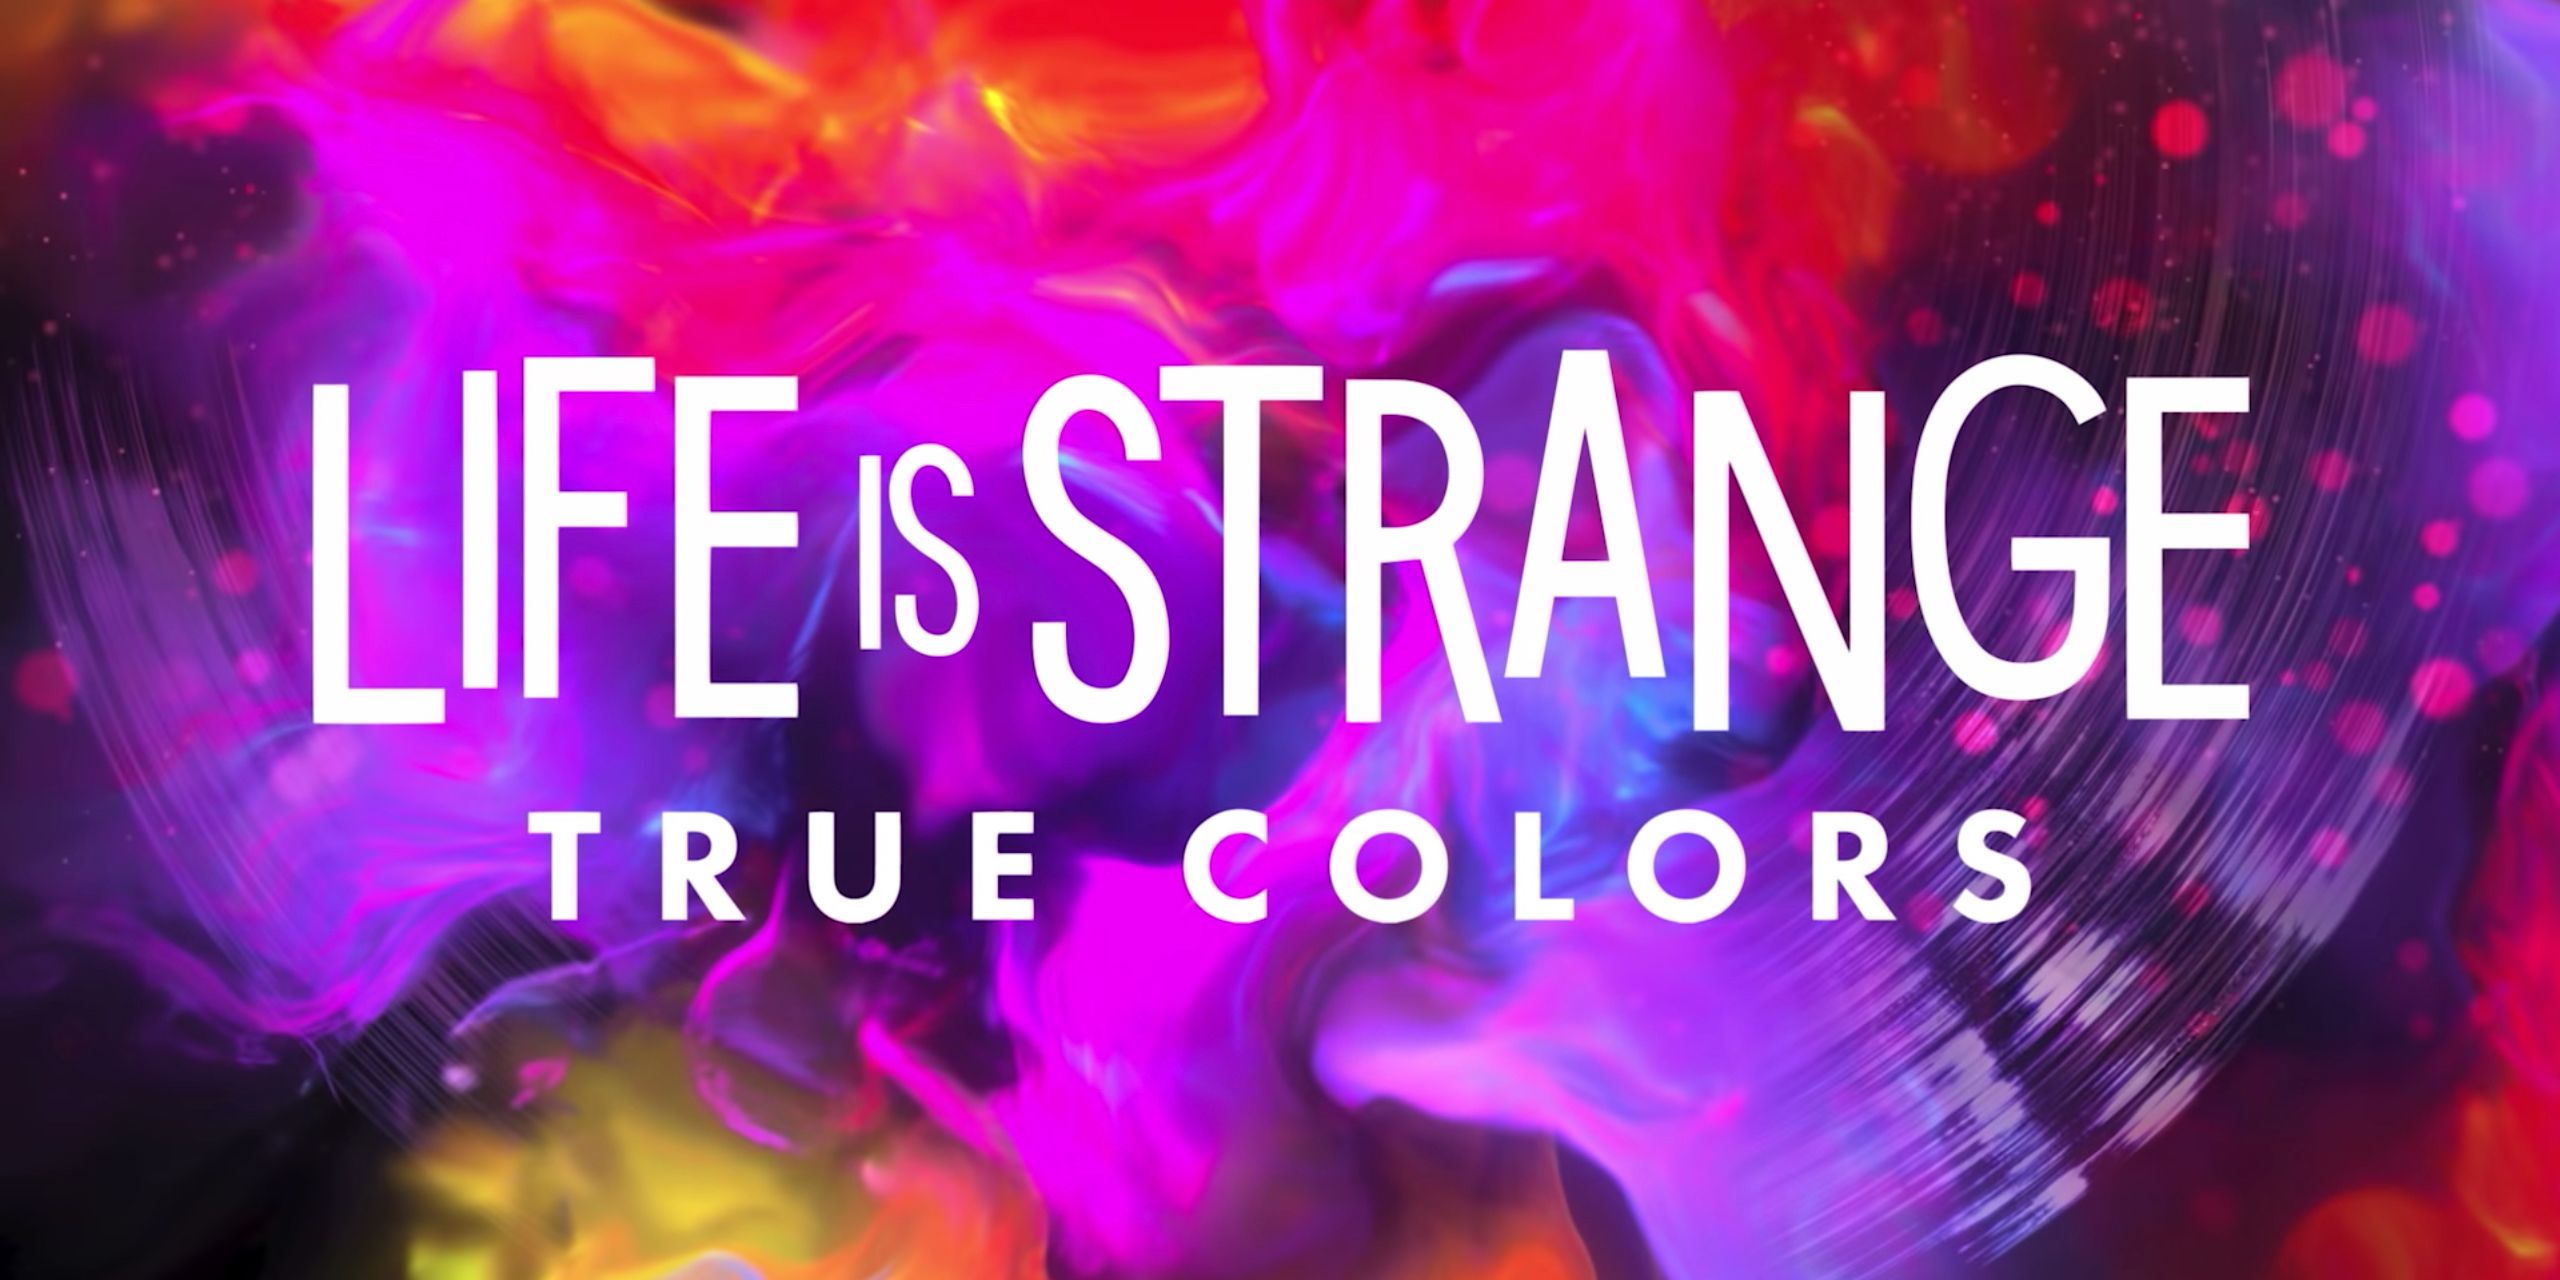 Buy Life is Strange: True Colors